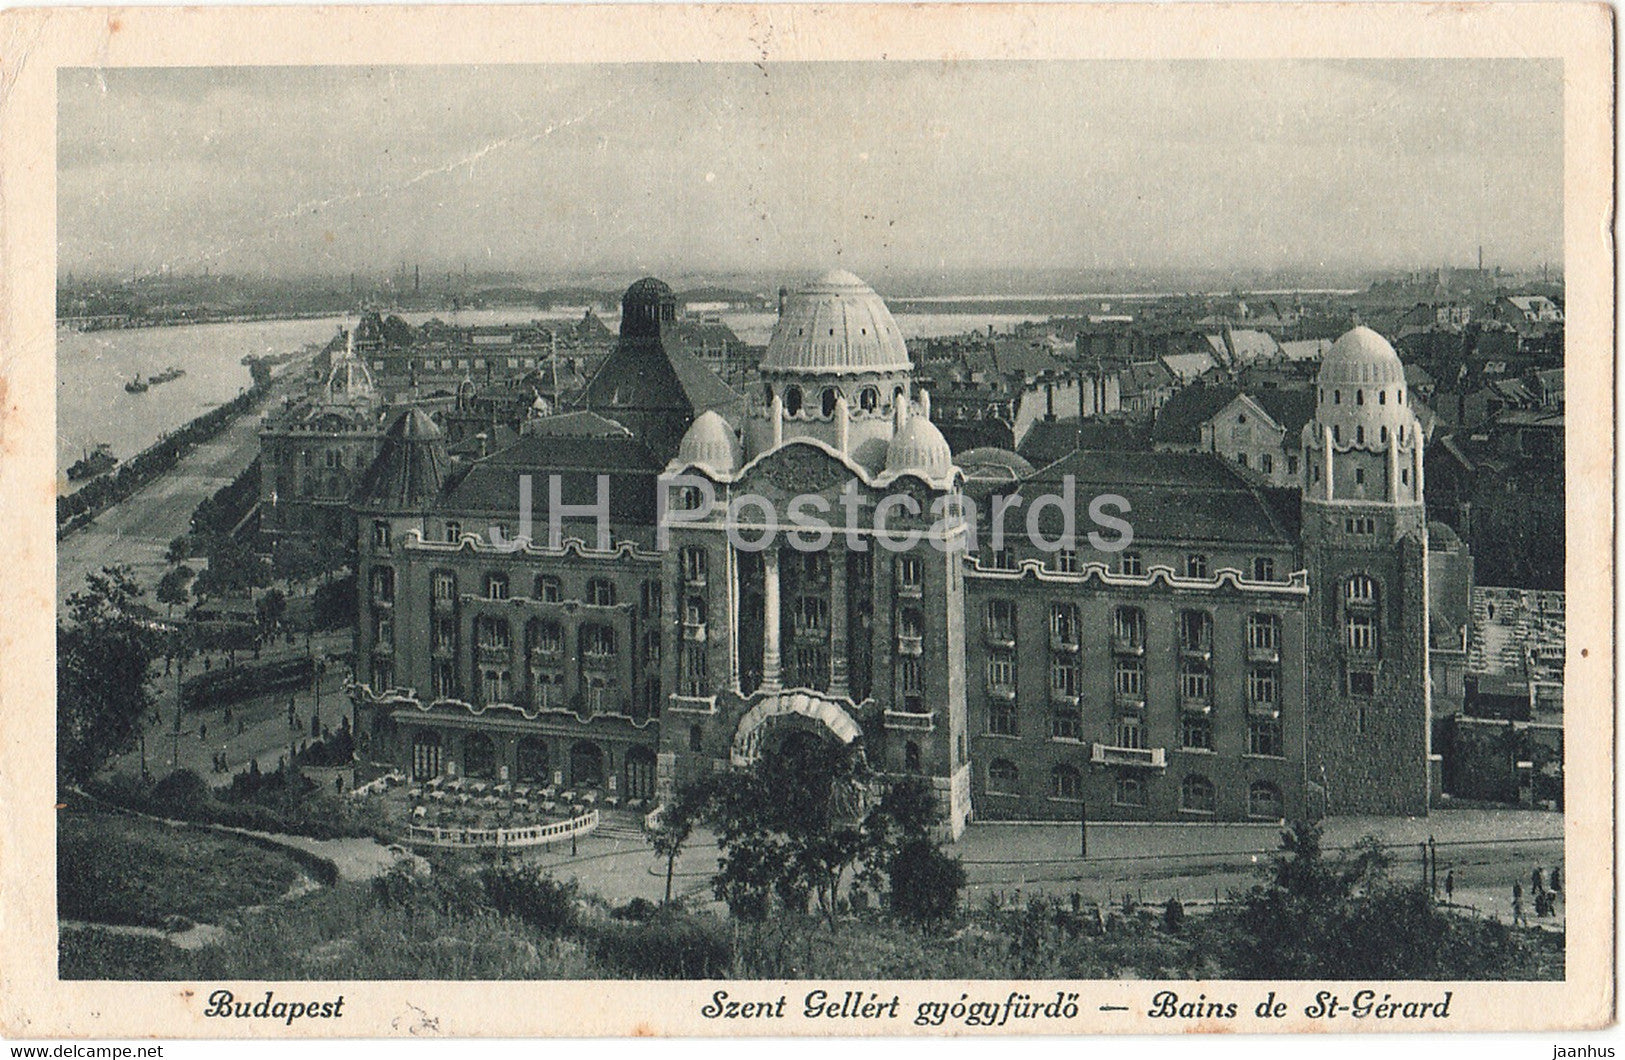 Budapest - Szent Gellert gyogyfurdo - Bains de St Gerard - old postcard - Hungary - used - JH Postcards